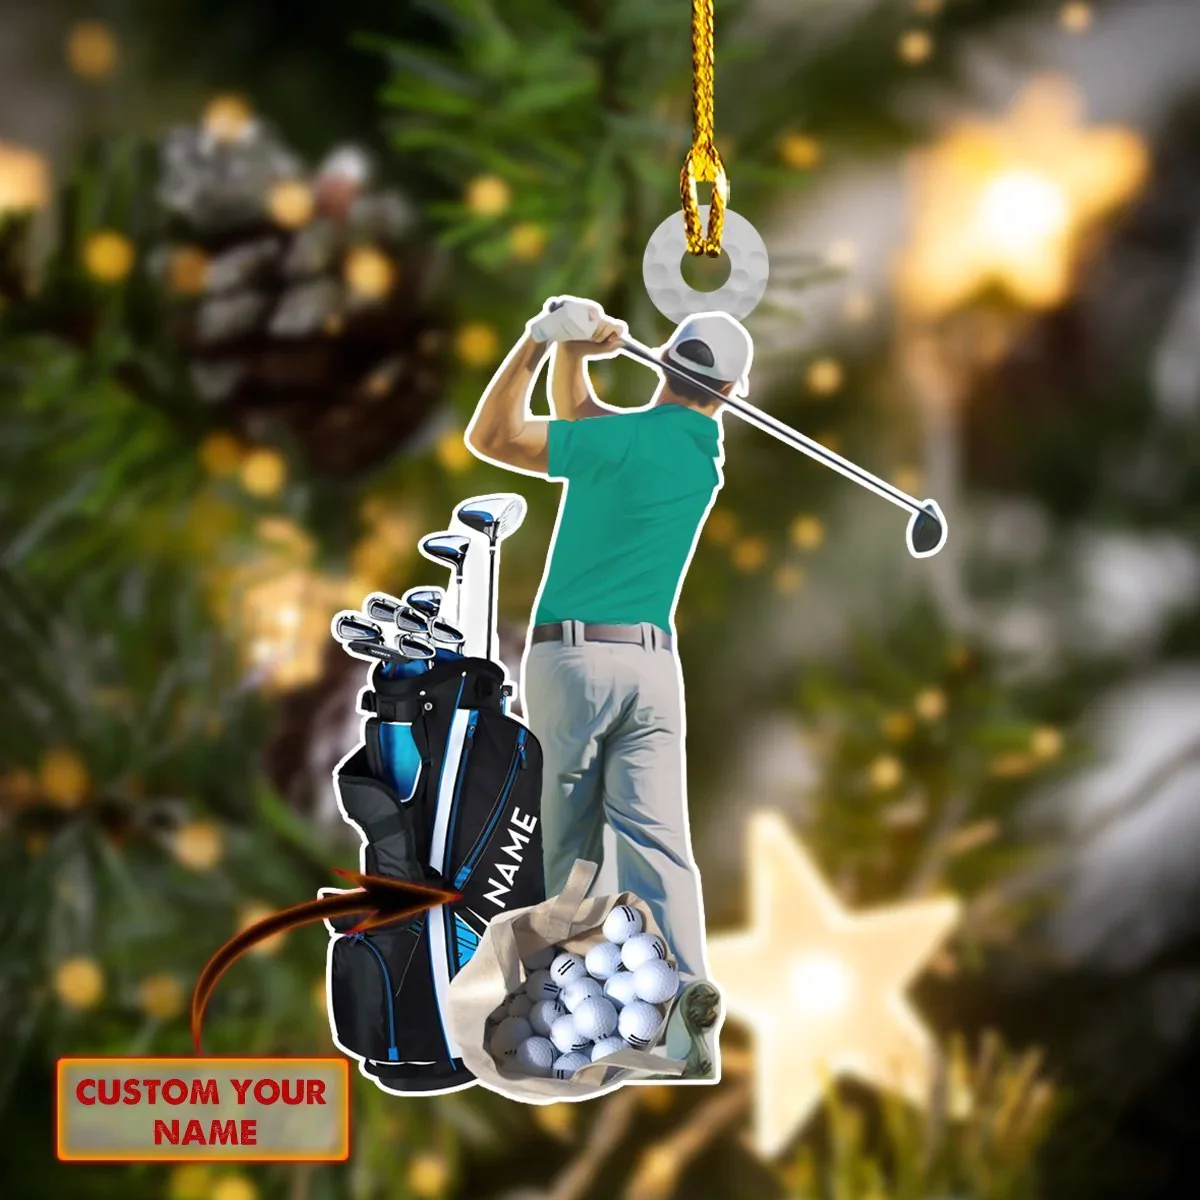 Custom name Gold player Shaped Ornament - Golf Gift - Christmas gift